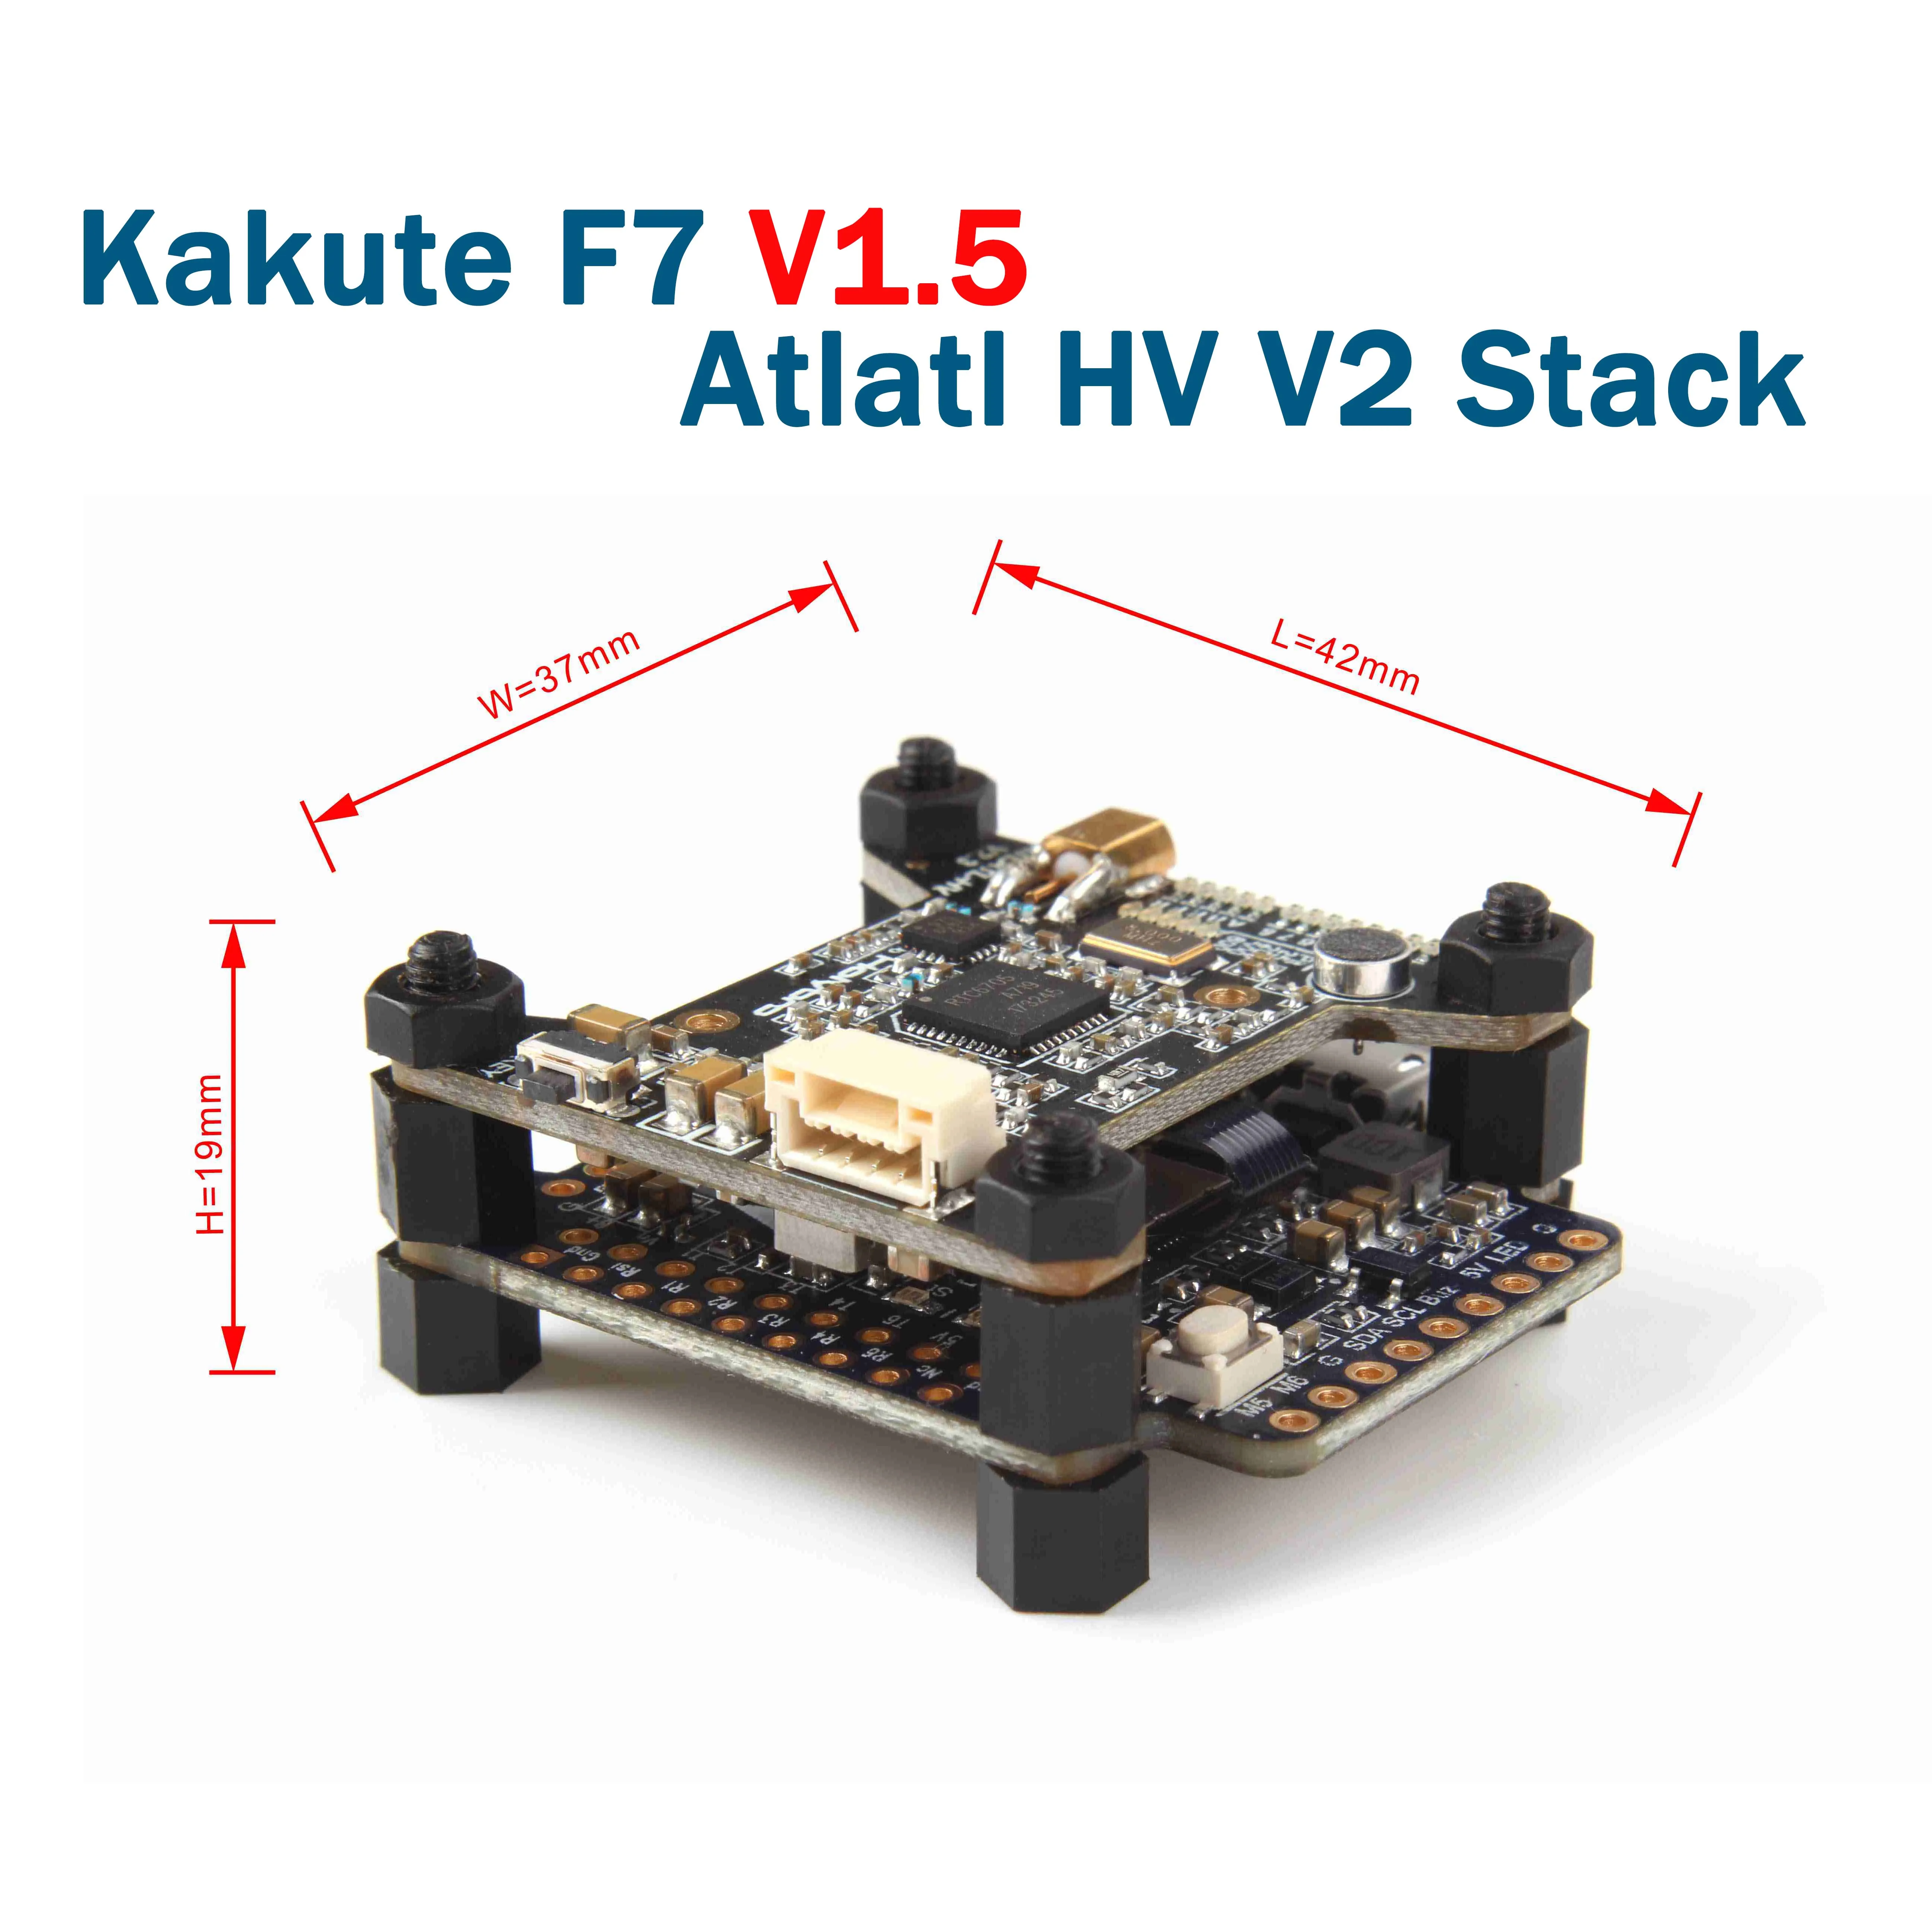 Holybro Kakute F7 V1.5 FC и Holybro Atlatl HV V2 5,8G/видеопередатчиком и Holybro Tekko32 4-в-1 35A ESC комбо для FPV RC - Цвет: F7 V1.5 Atlatl HV V2